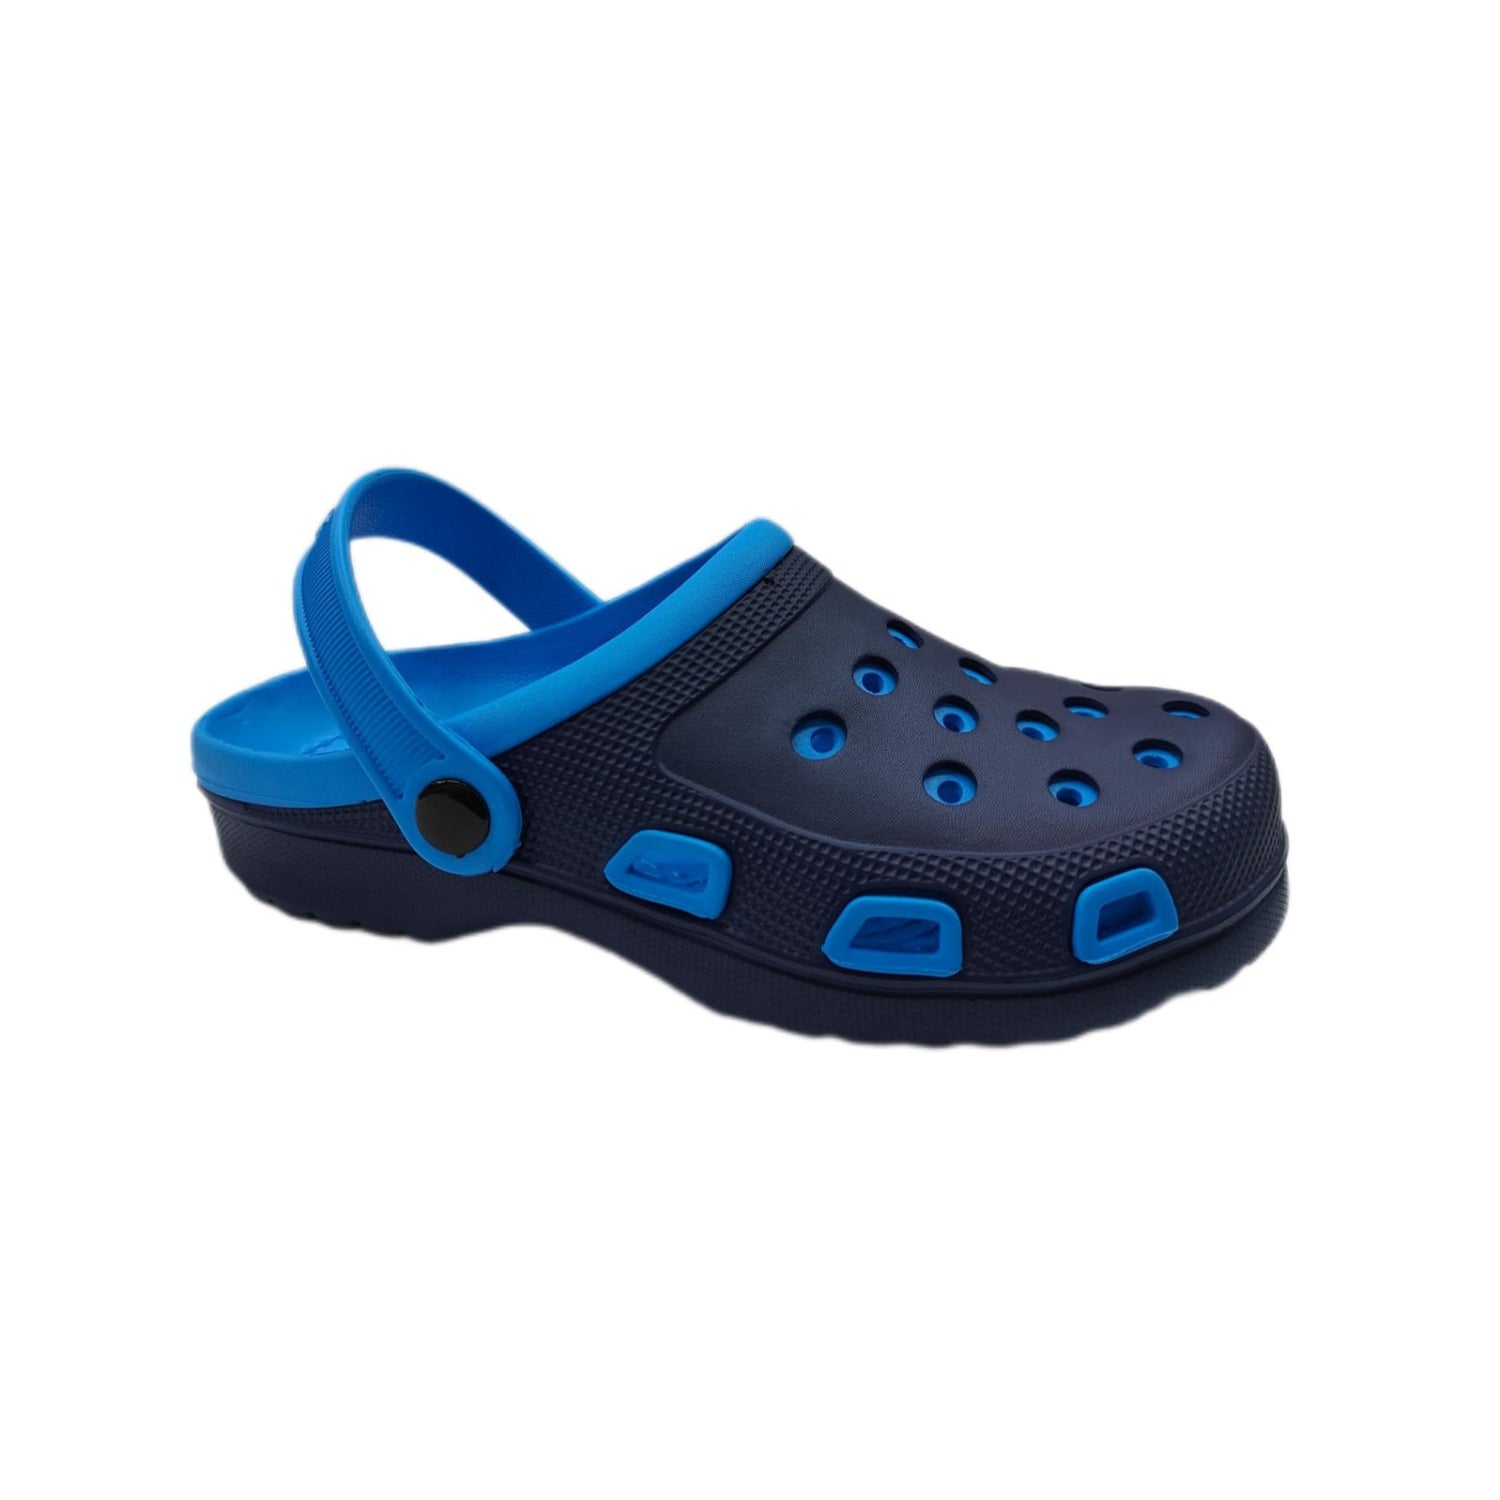 Buy Gokyo Clog Sandal | Clog Sandals at Gokyo Outdoor Clothing & Gear